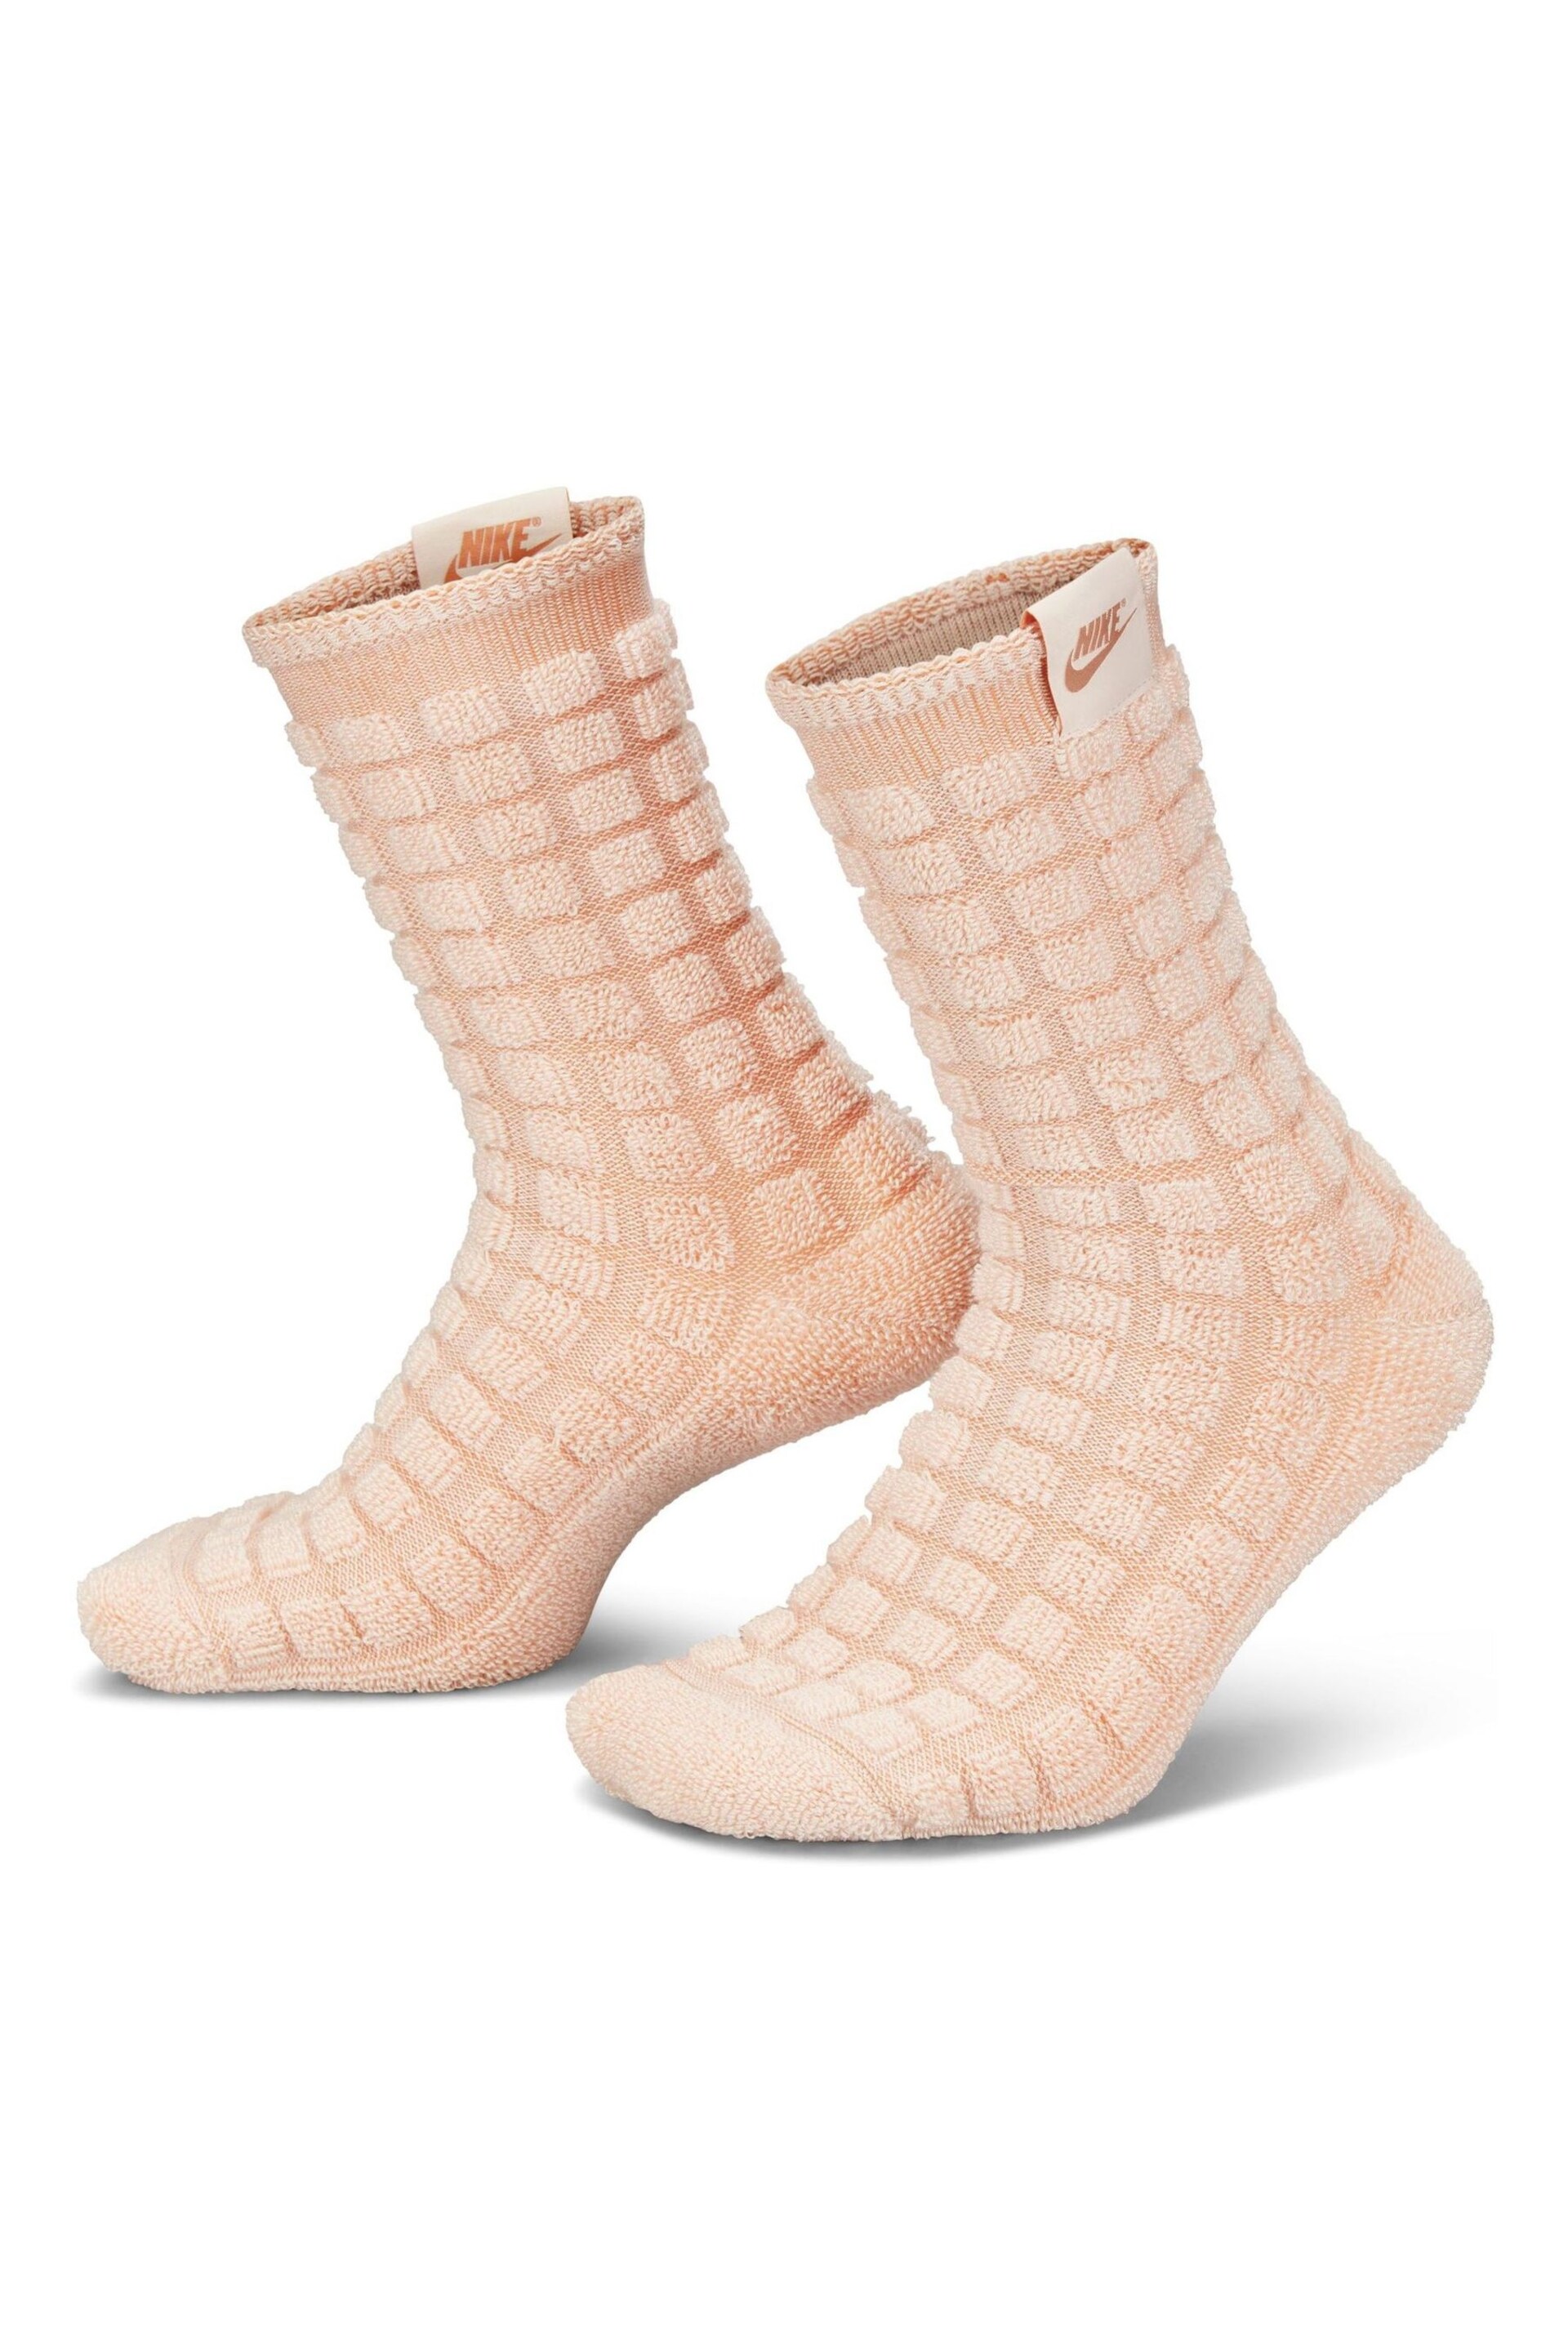 Nike Pink Everyday Cozy House Crew Socks 1 Pair - Image 1 of 3